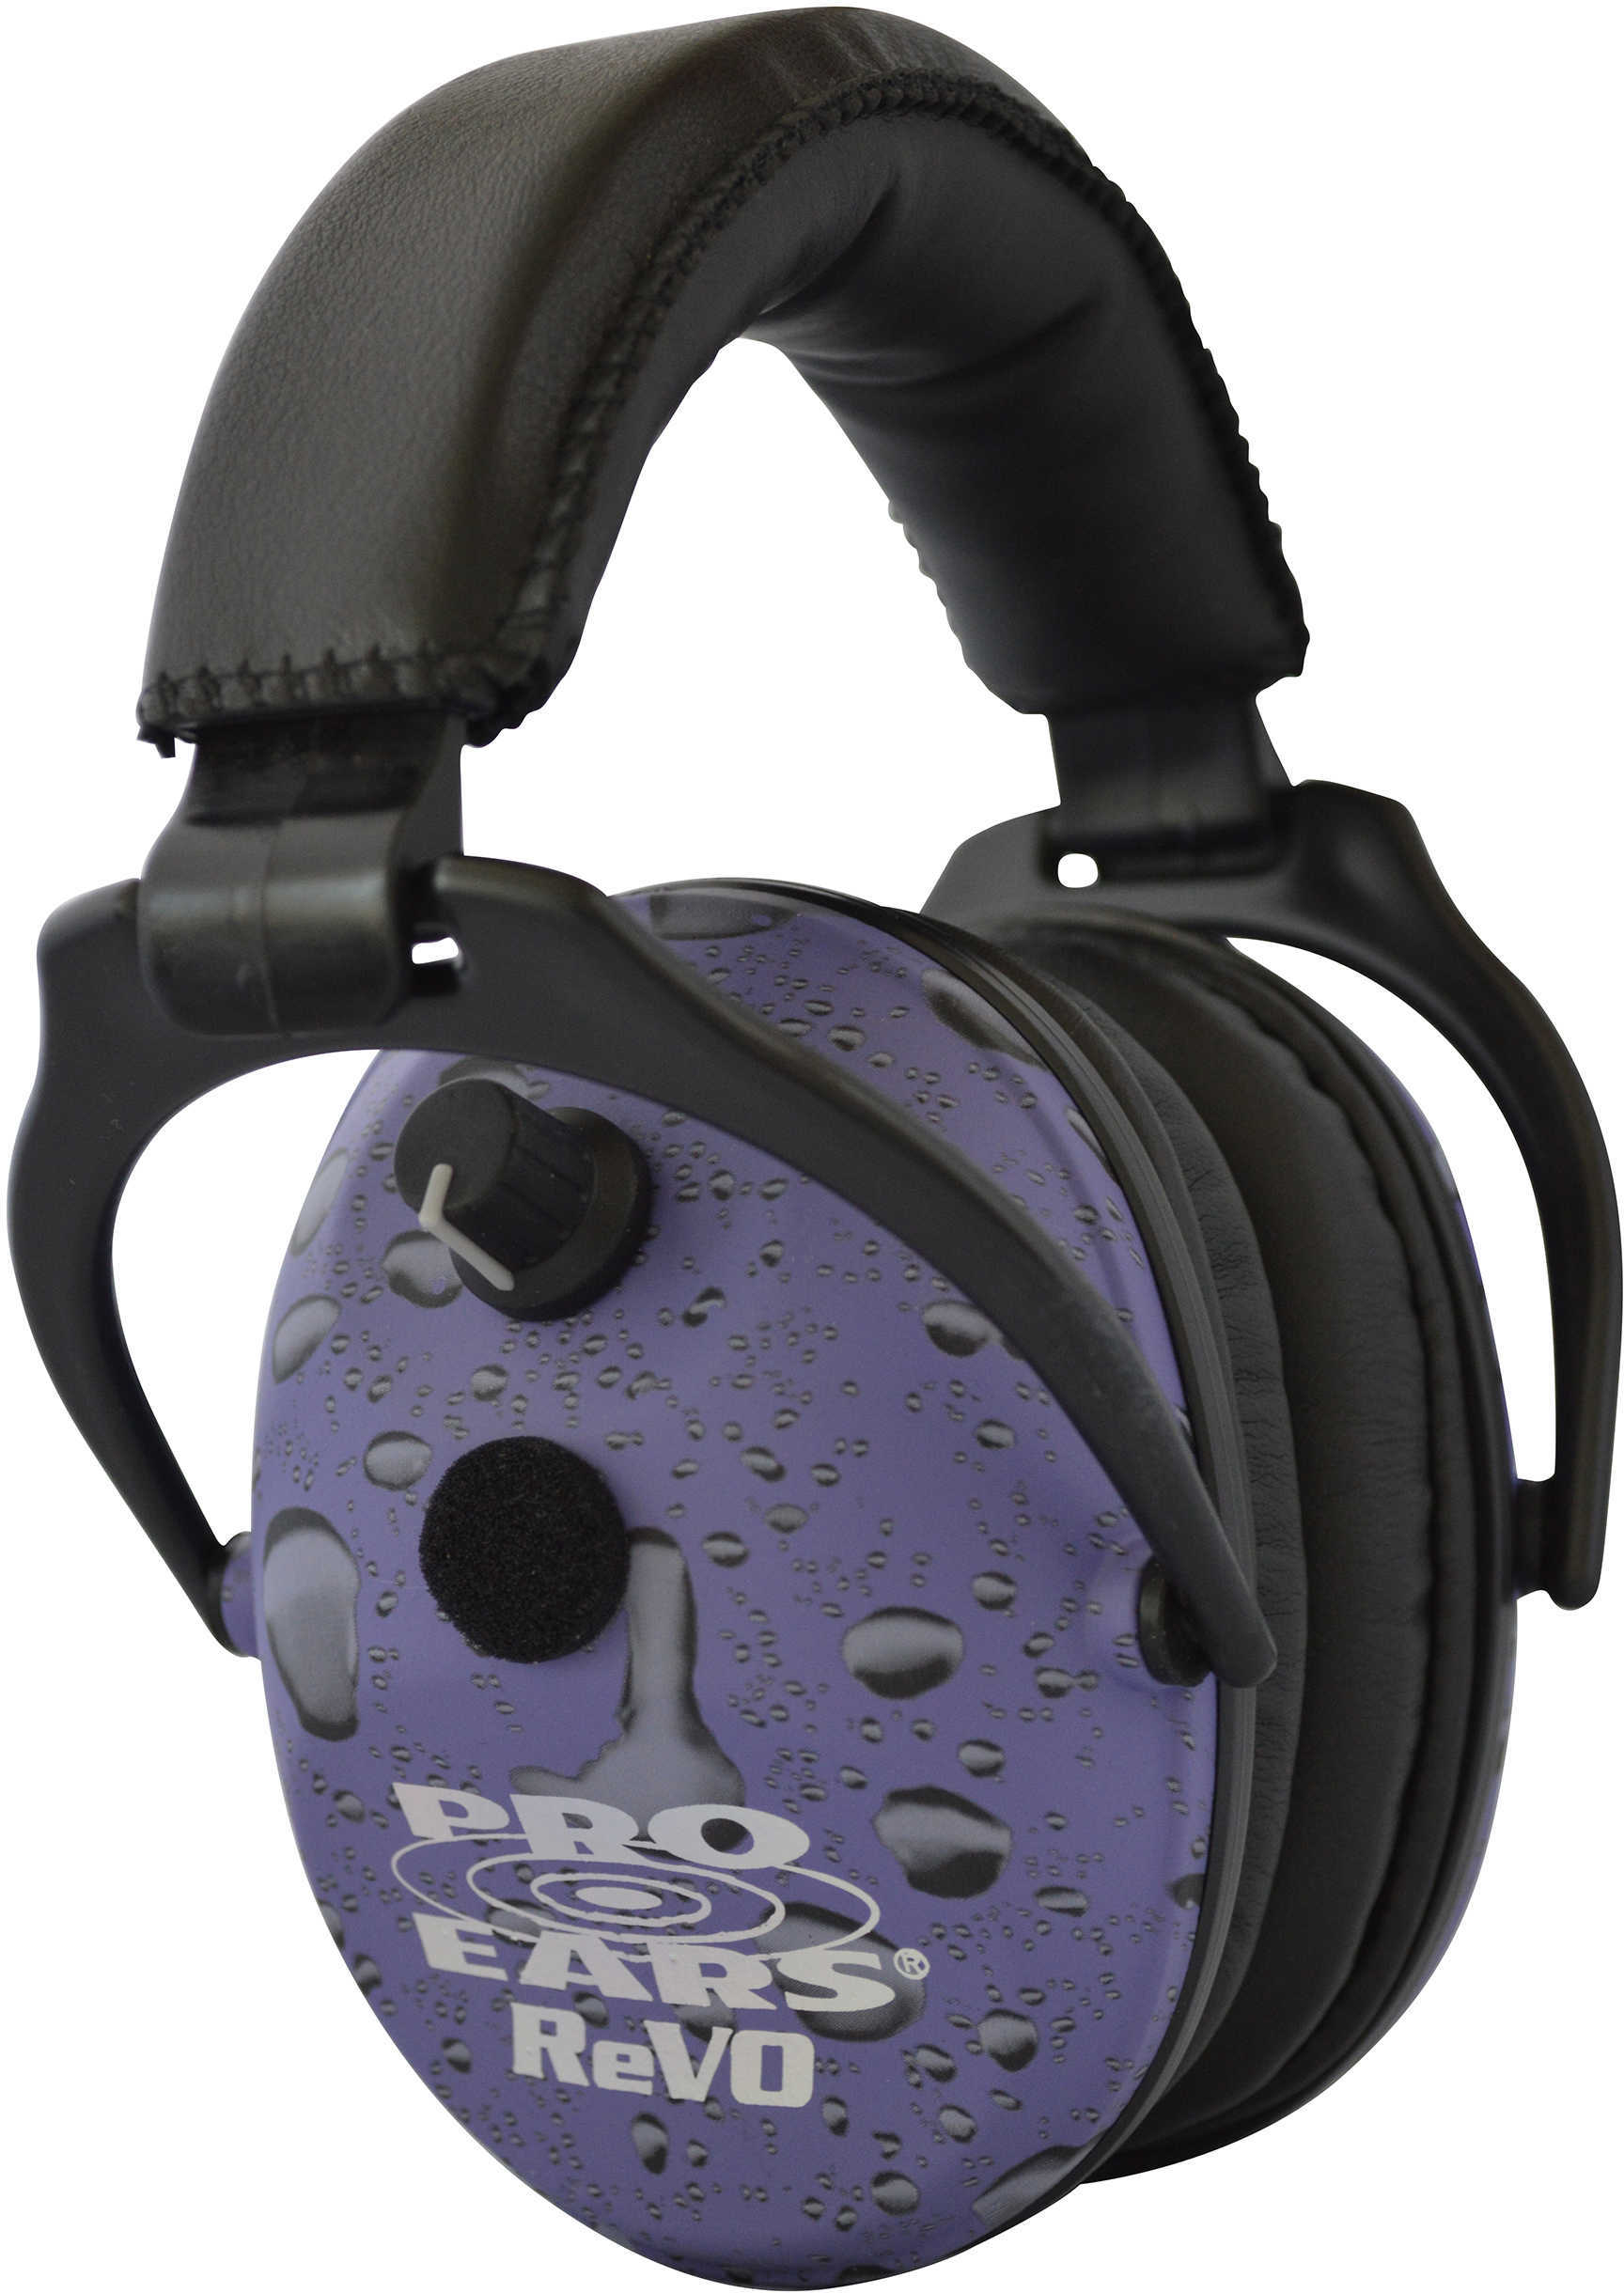 Pro Ears ReVO Electronic Noise Reduction Rating 25dB, Purple Rain Md: ER300PUR